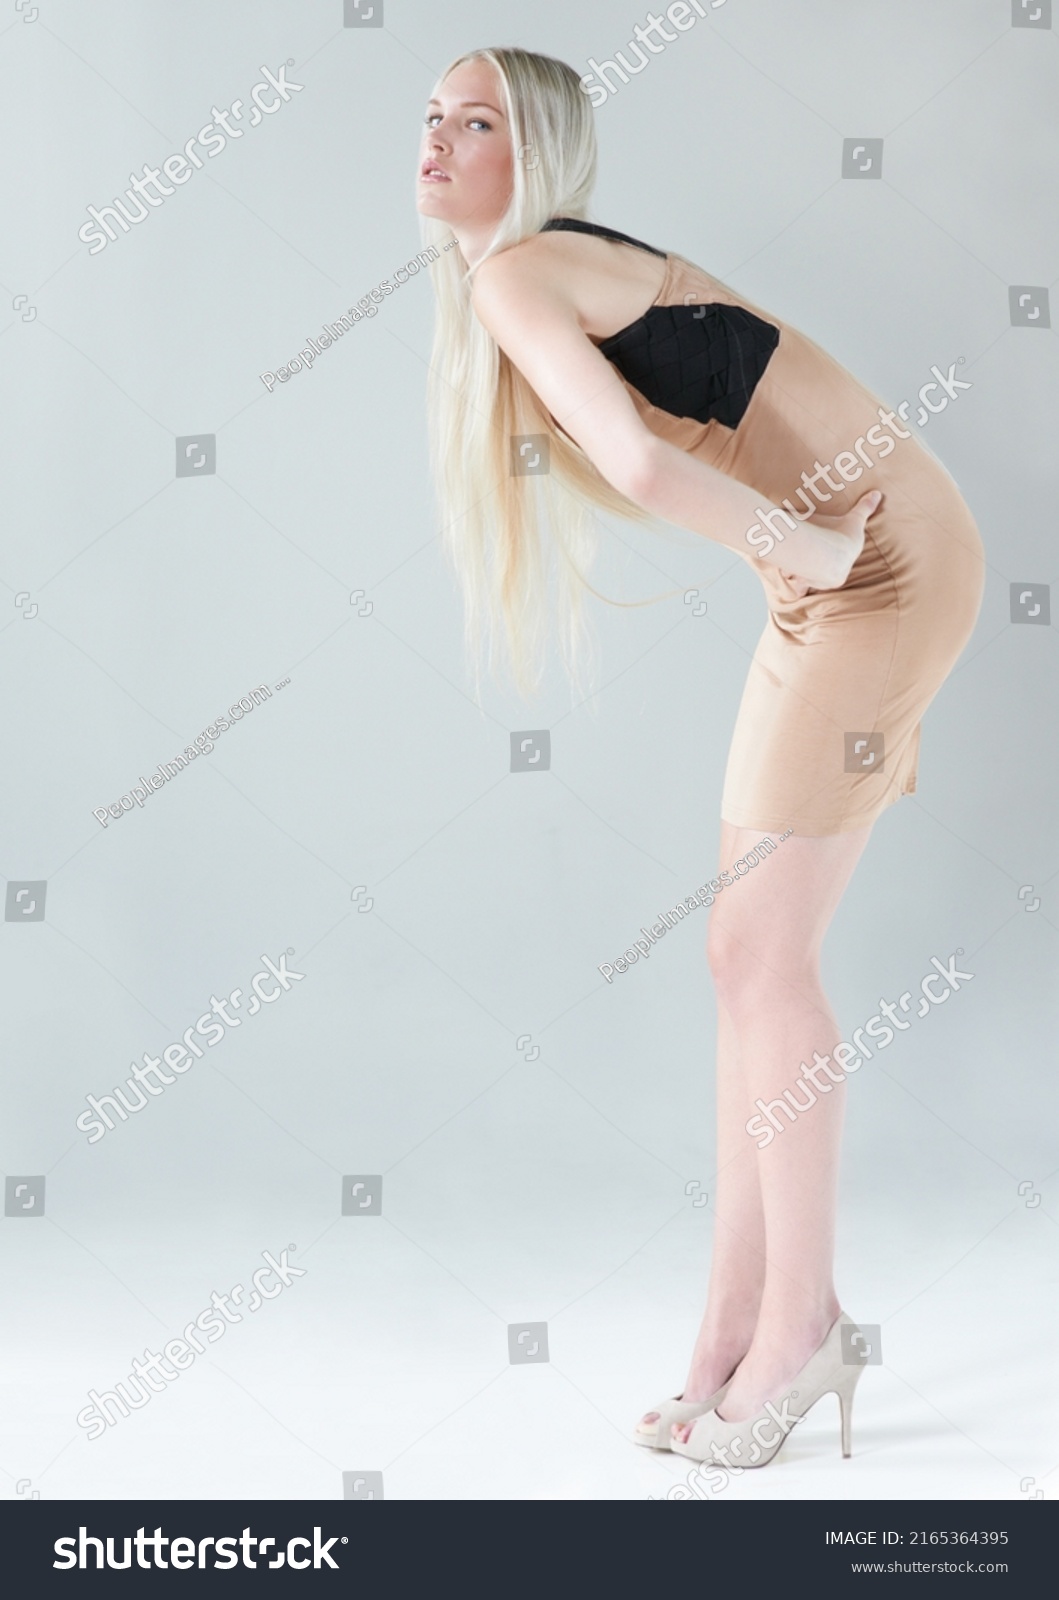 Female Bending Over hentai hqxxxpics